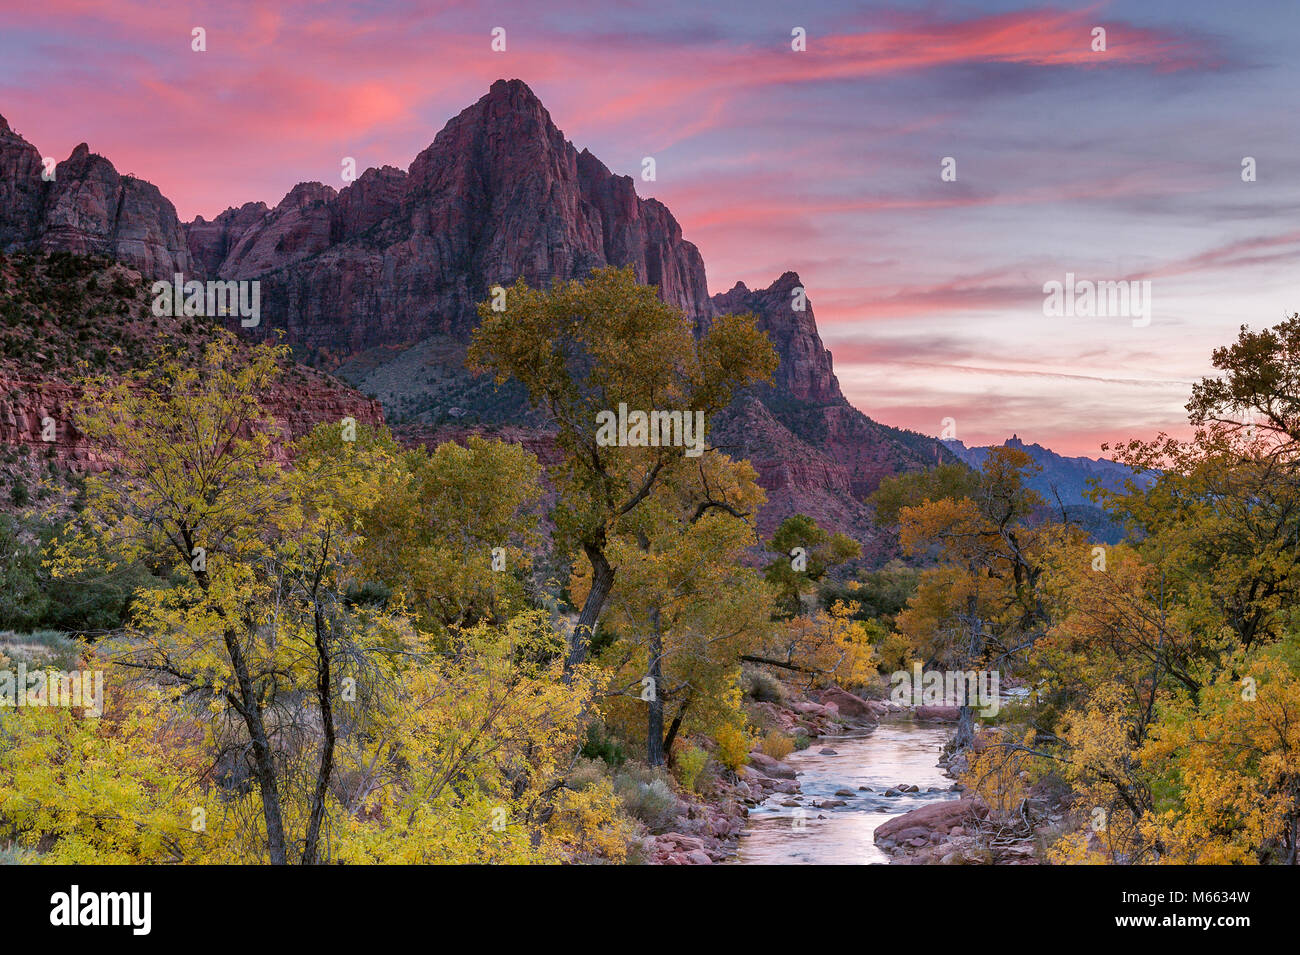 Dusk, The Watchman, Virgin River, Zion National Park, Utah Stock Photo